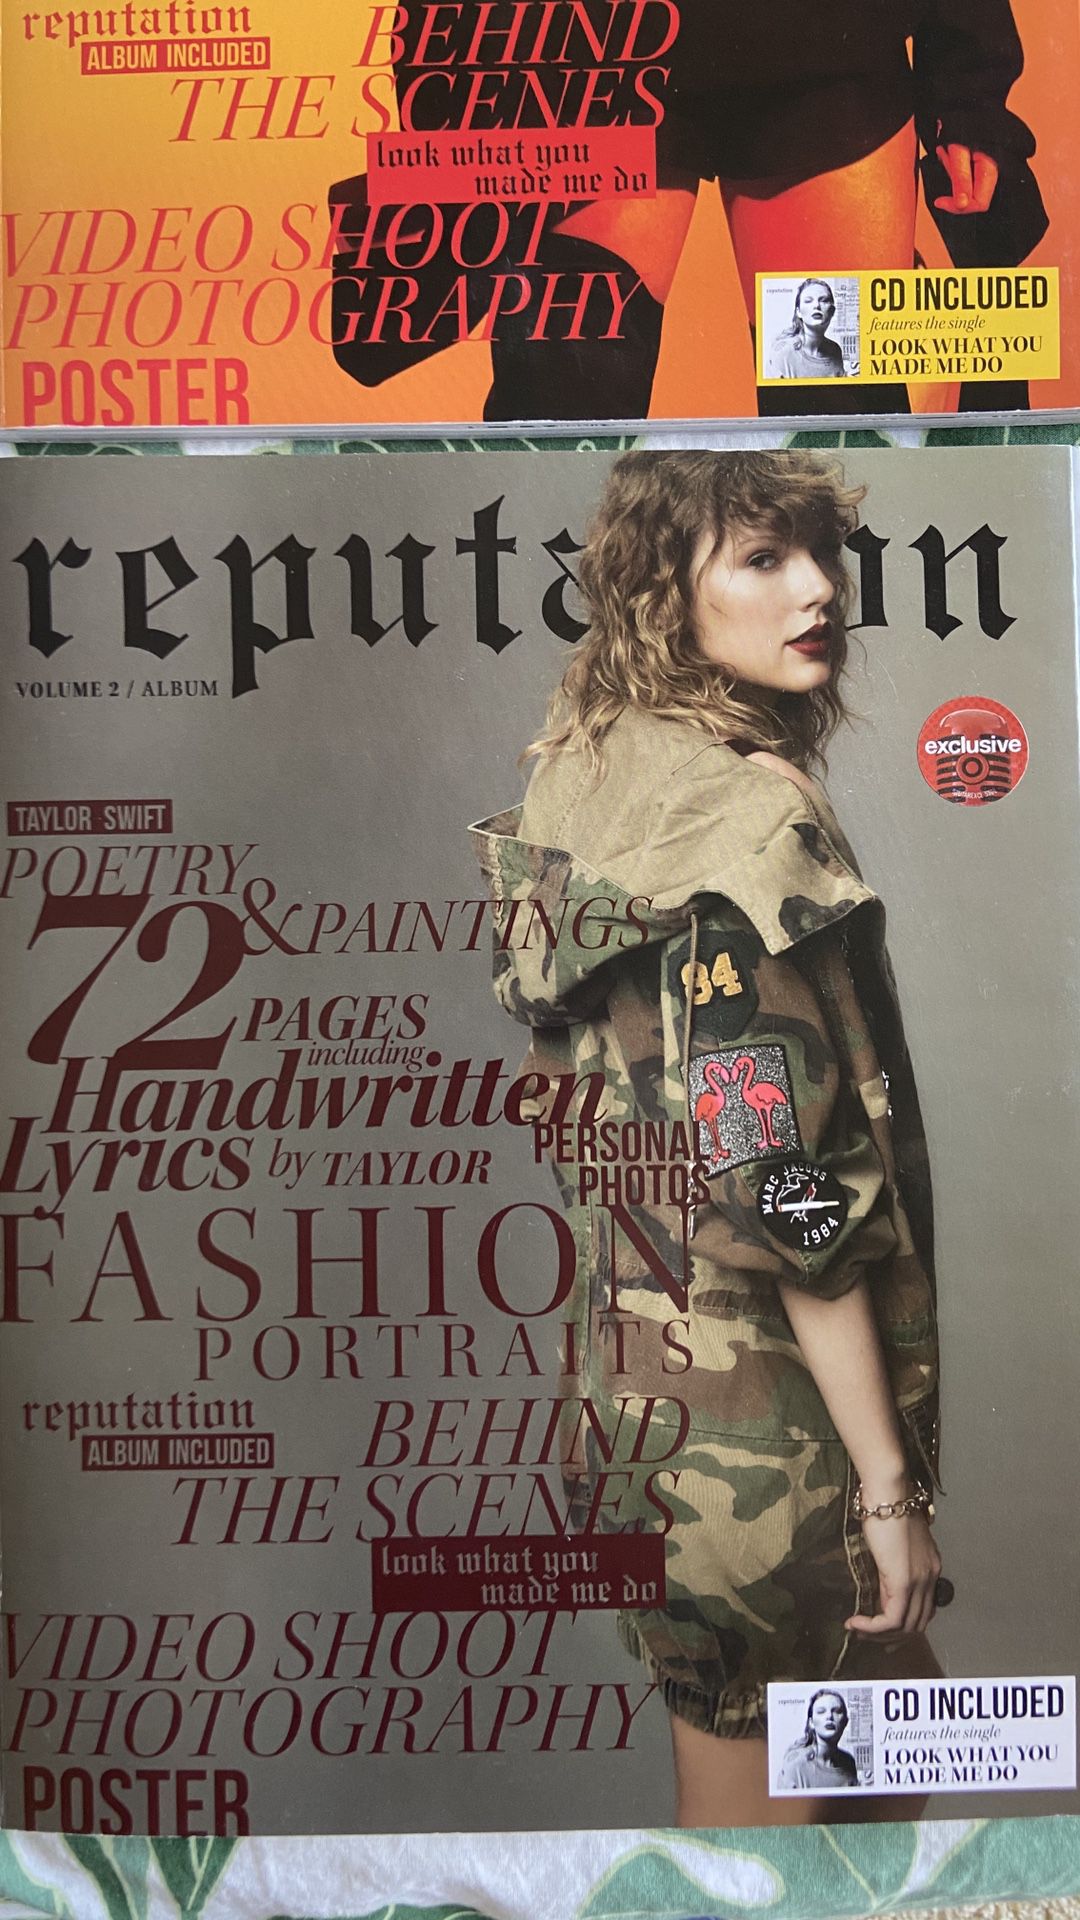 Taylor Swift reputation magazine albums vol.1&2 w posters